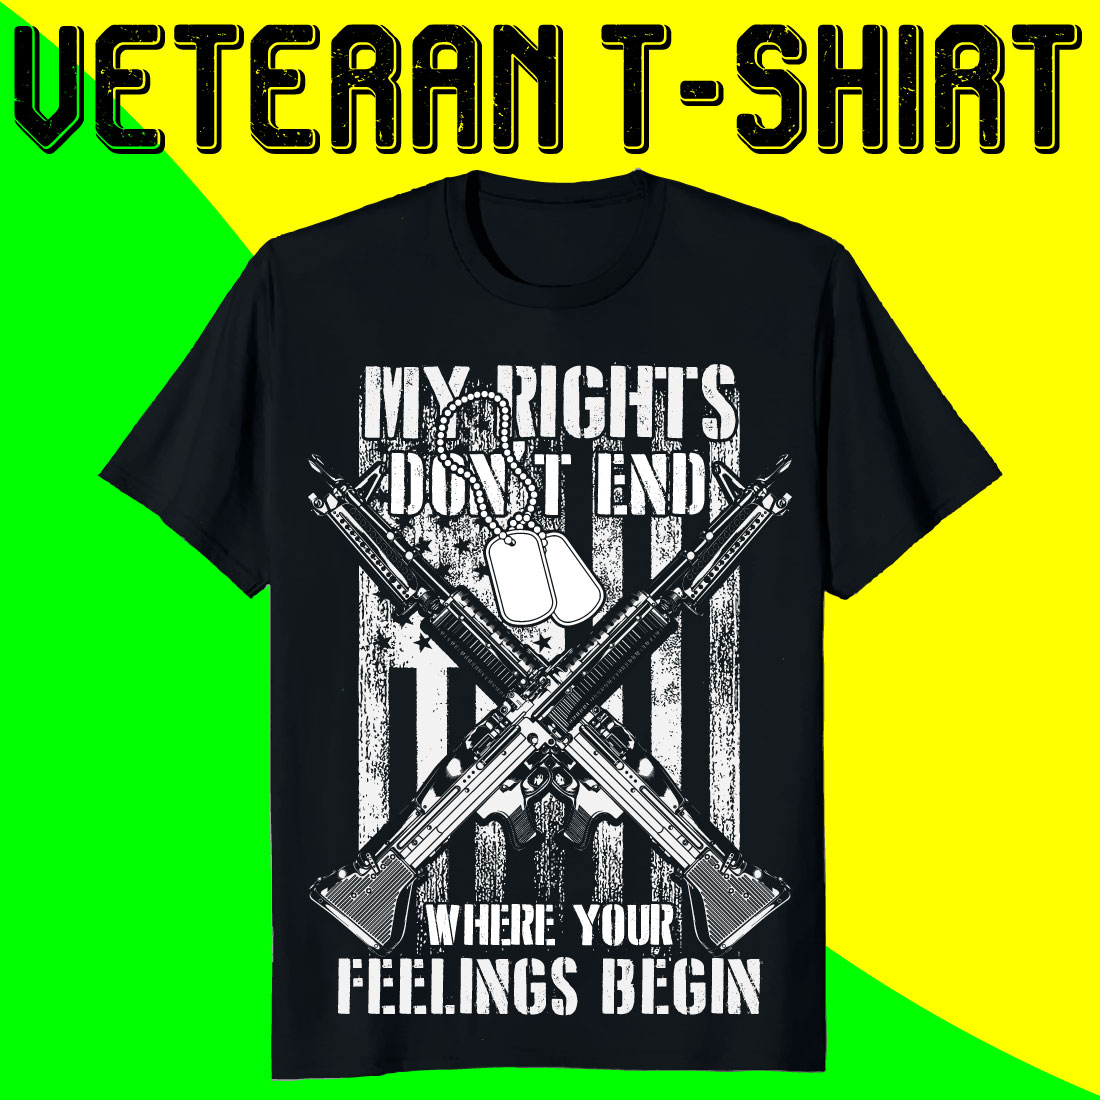 Veteran T-shirt Designs Bundle preview image.